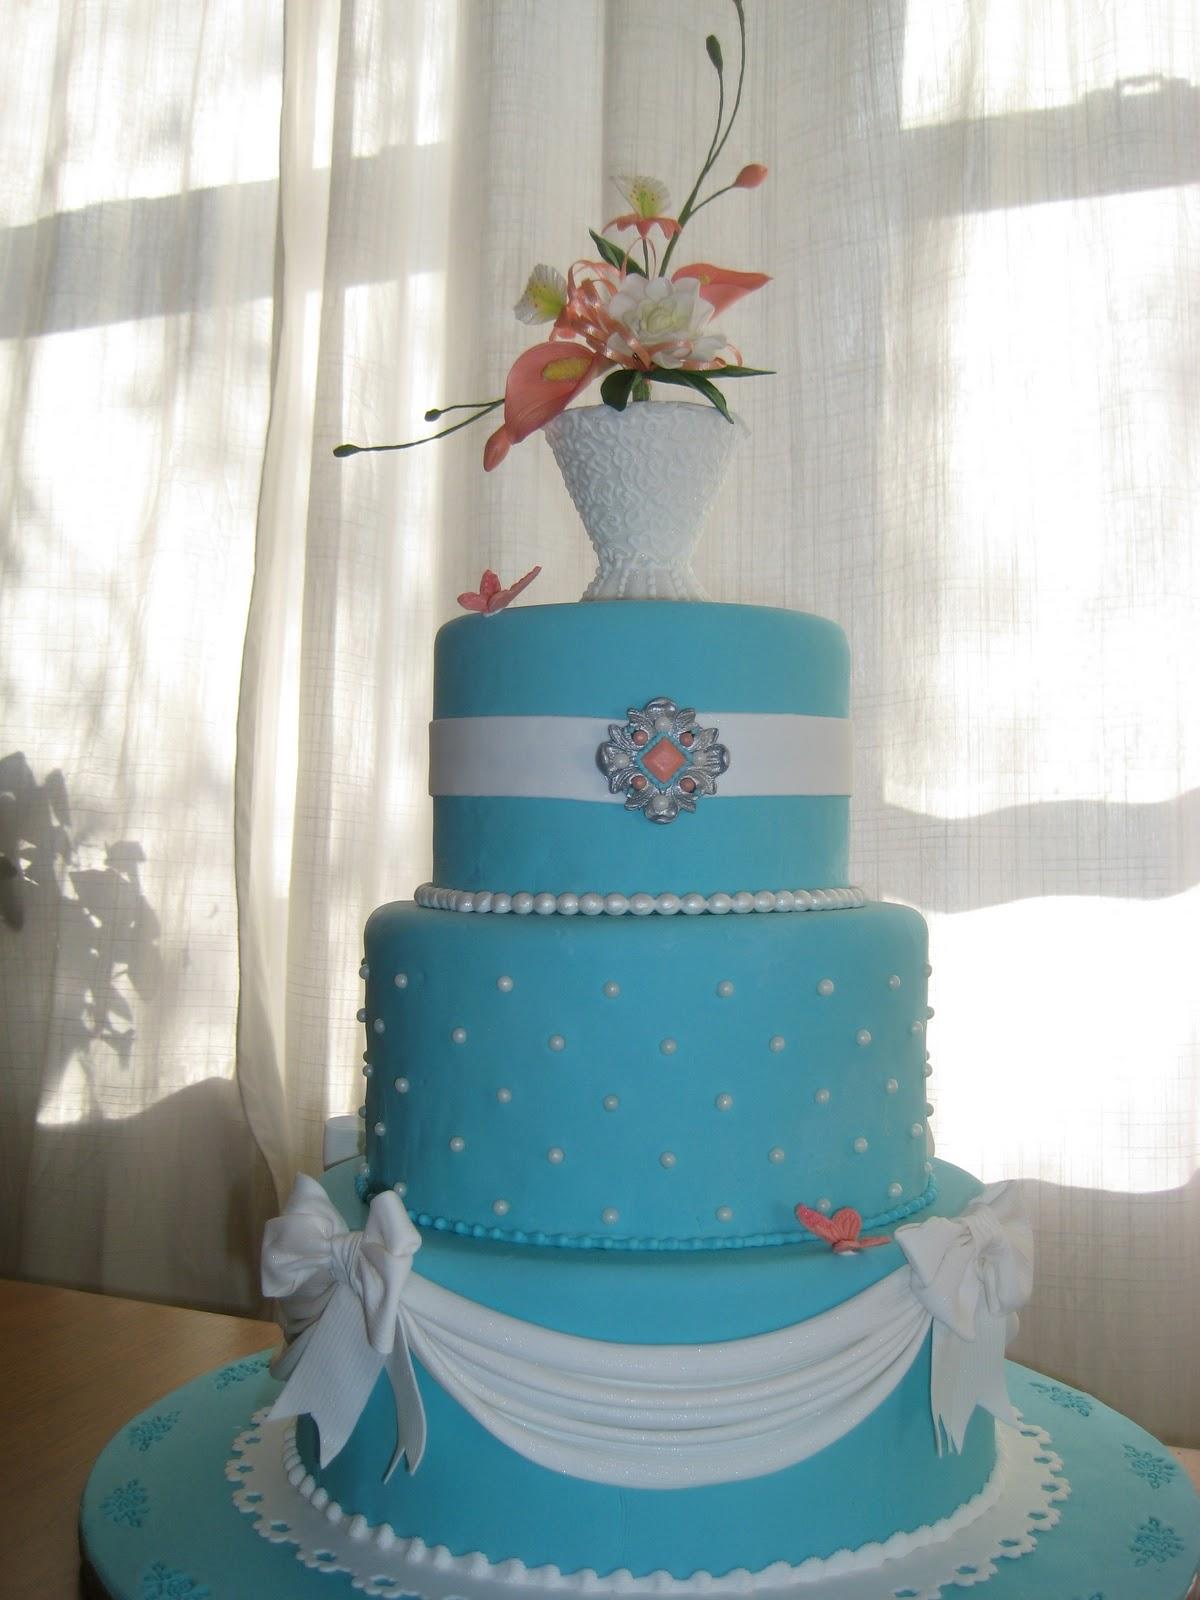 This three tier wedding cake